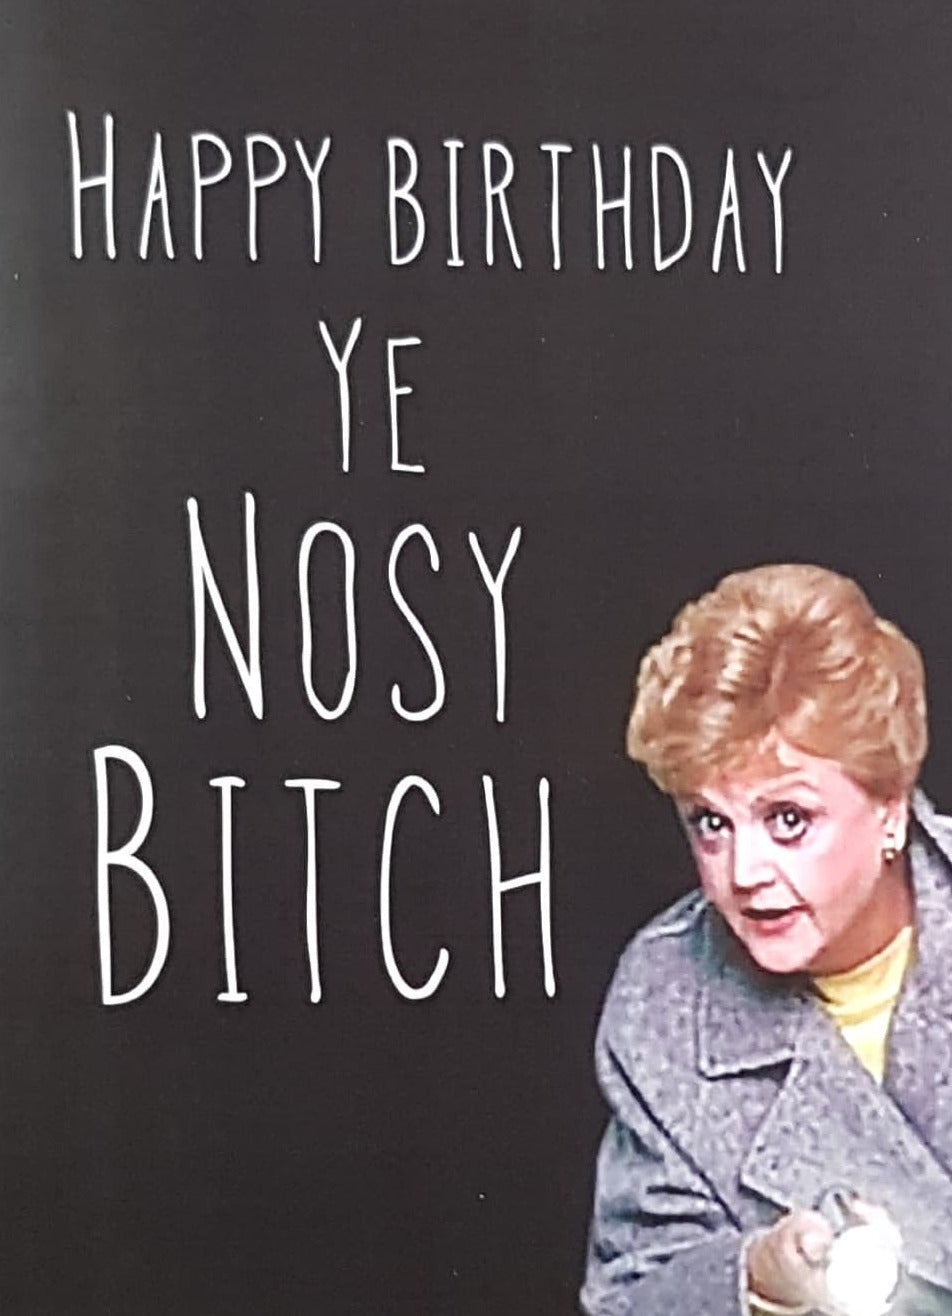 Dublin Card Company  - Ye Nosy Bitch (Birthday)